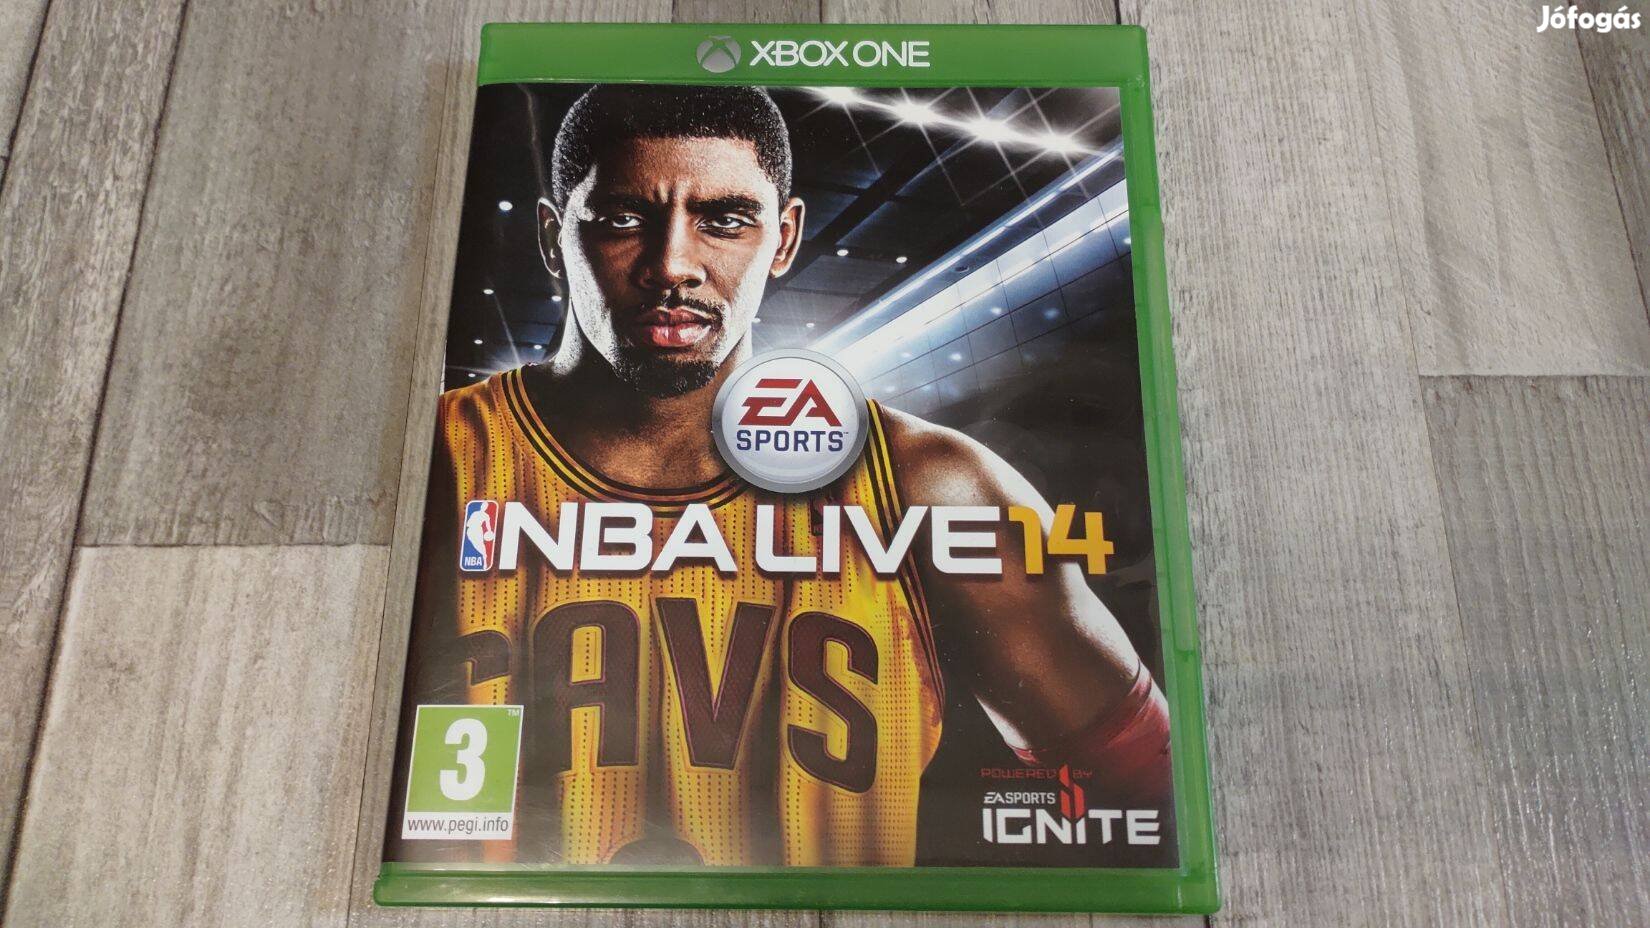 Xbox One(S/X)-Series X : NBA Live 14